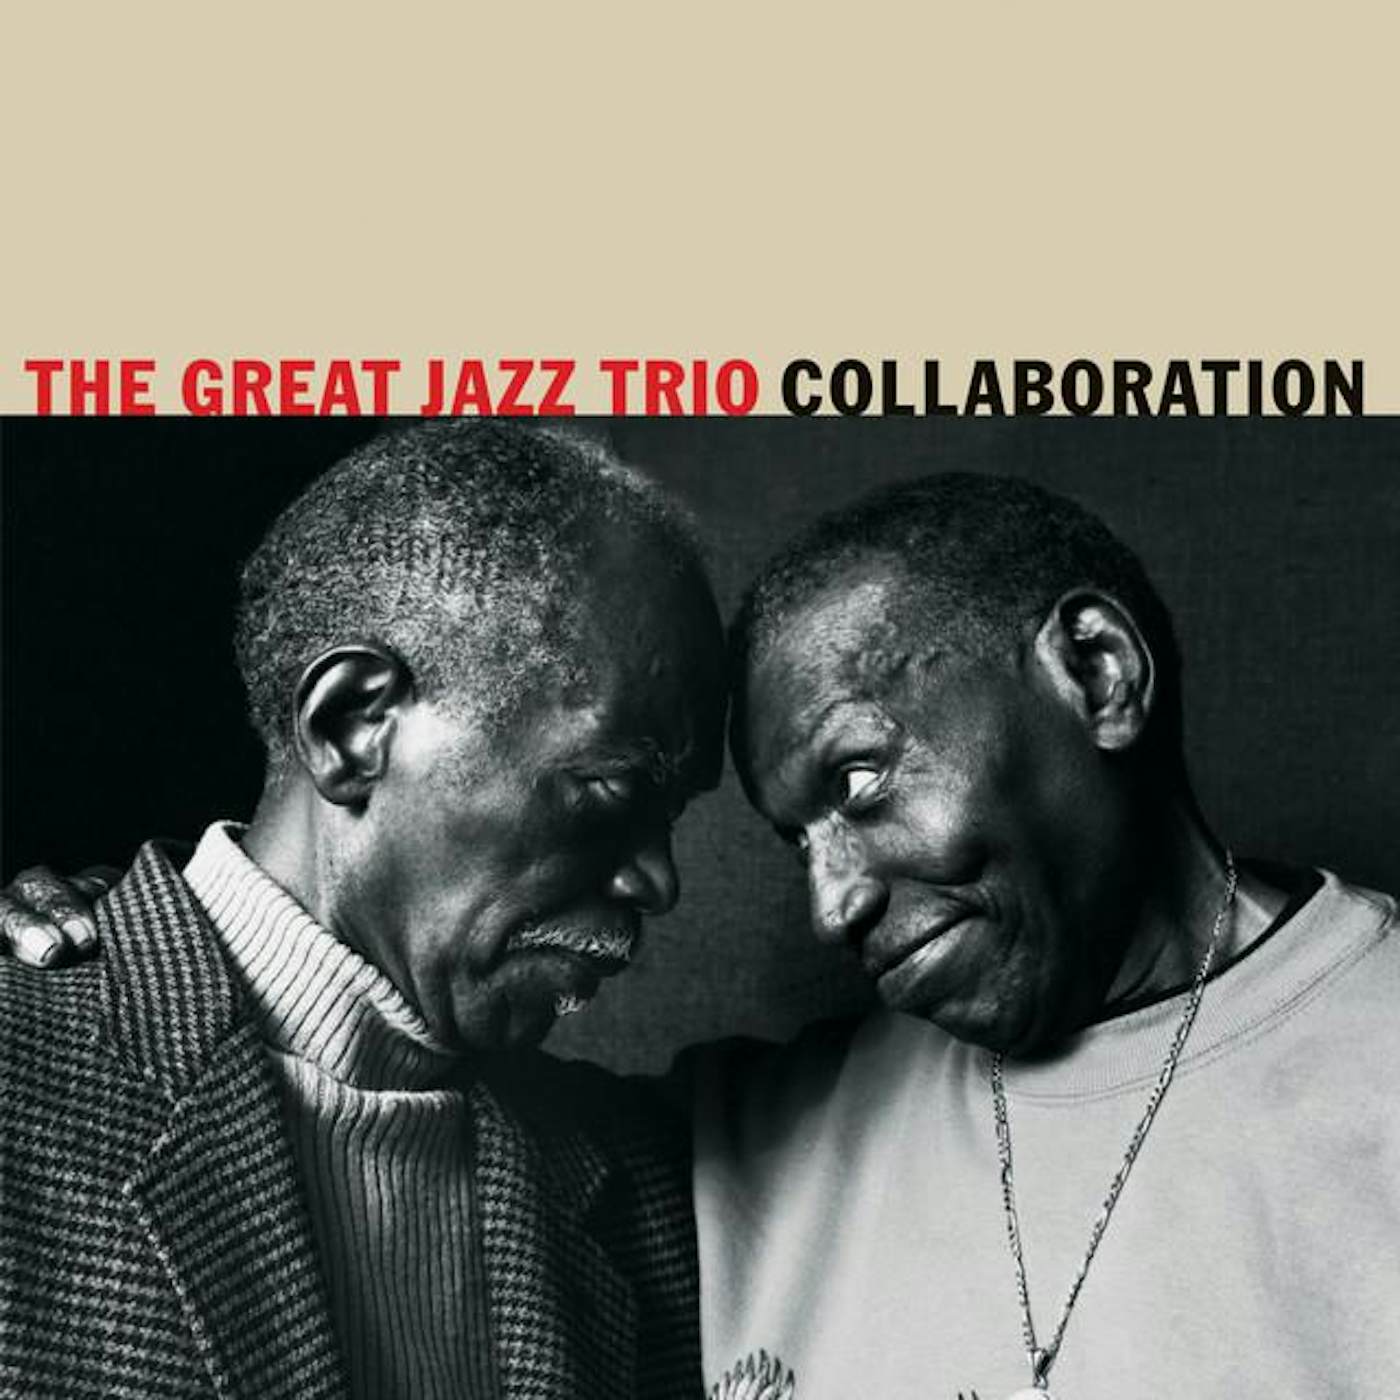 The Great Jazz Trio